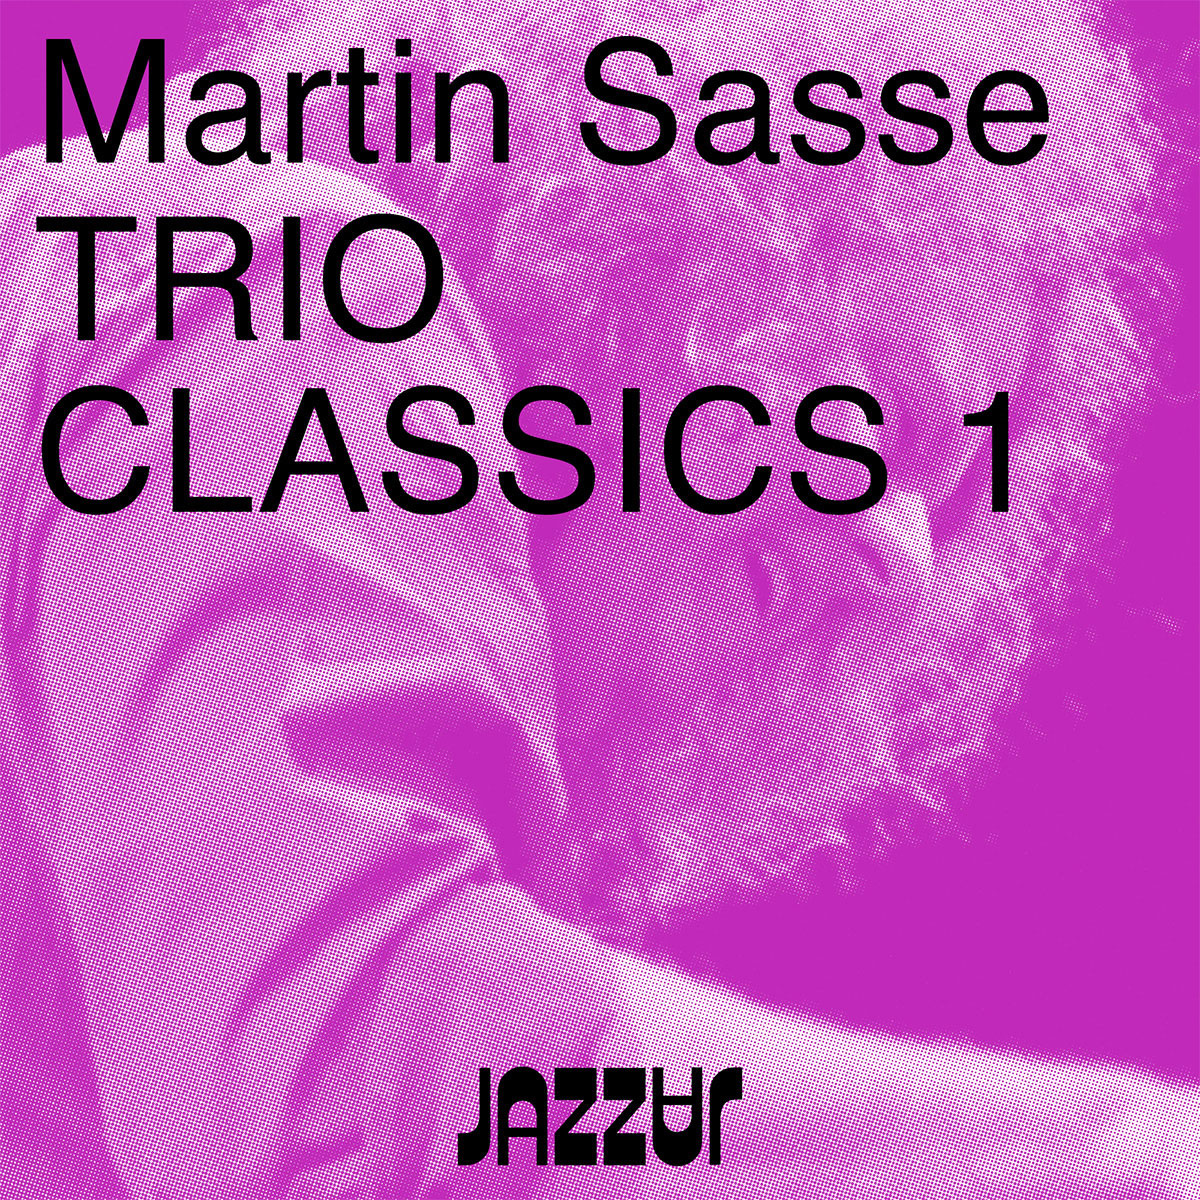 JJ53020-Martin-Sasse-Trio-Classics-Vol-1-front1